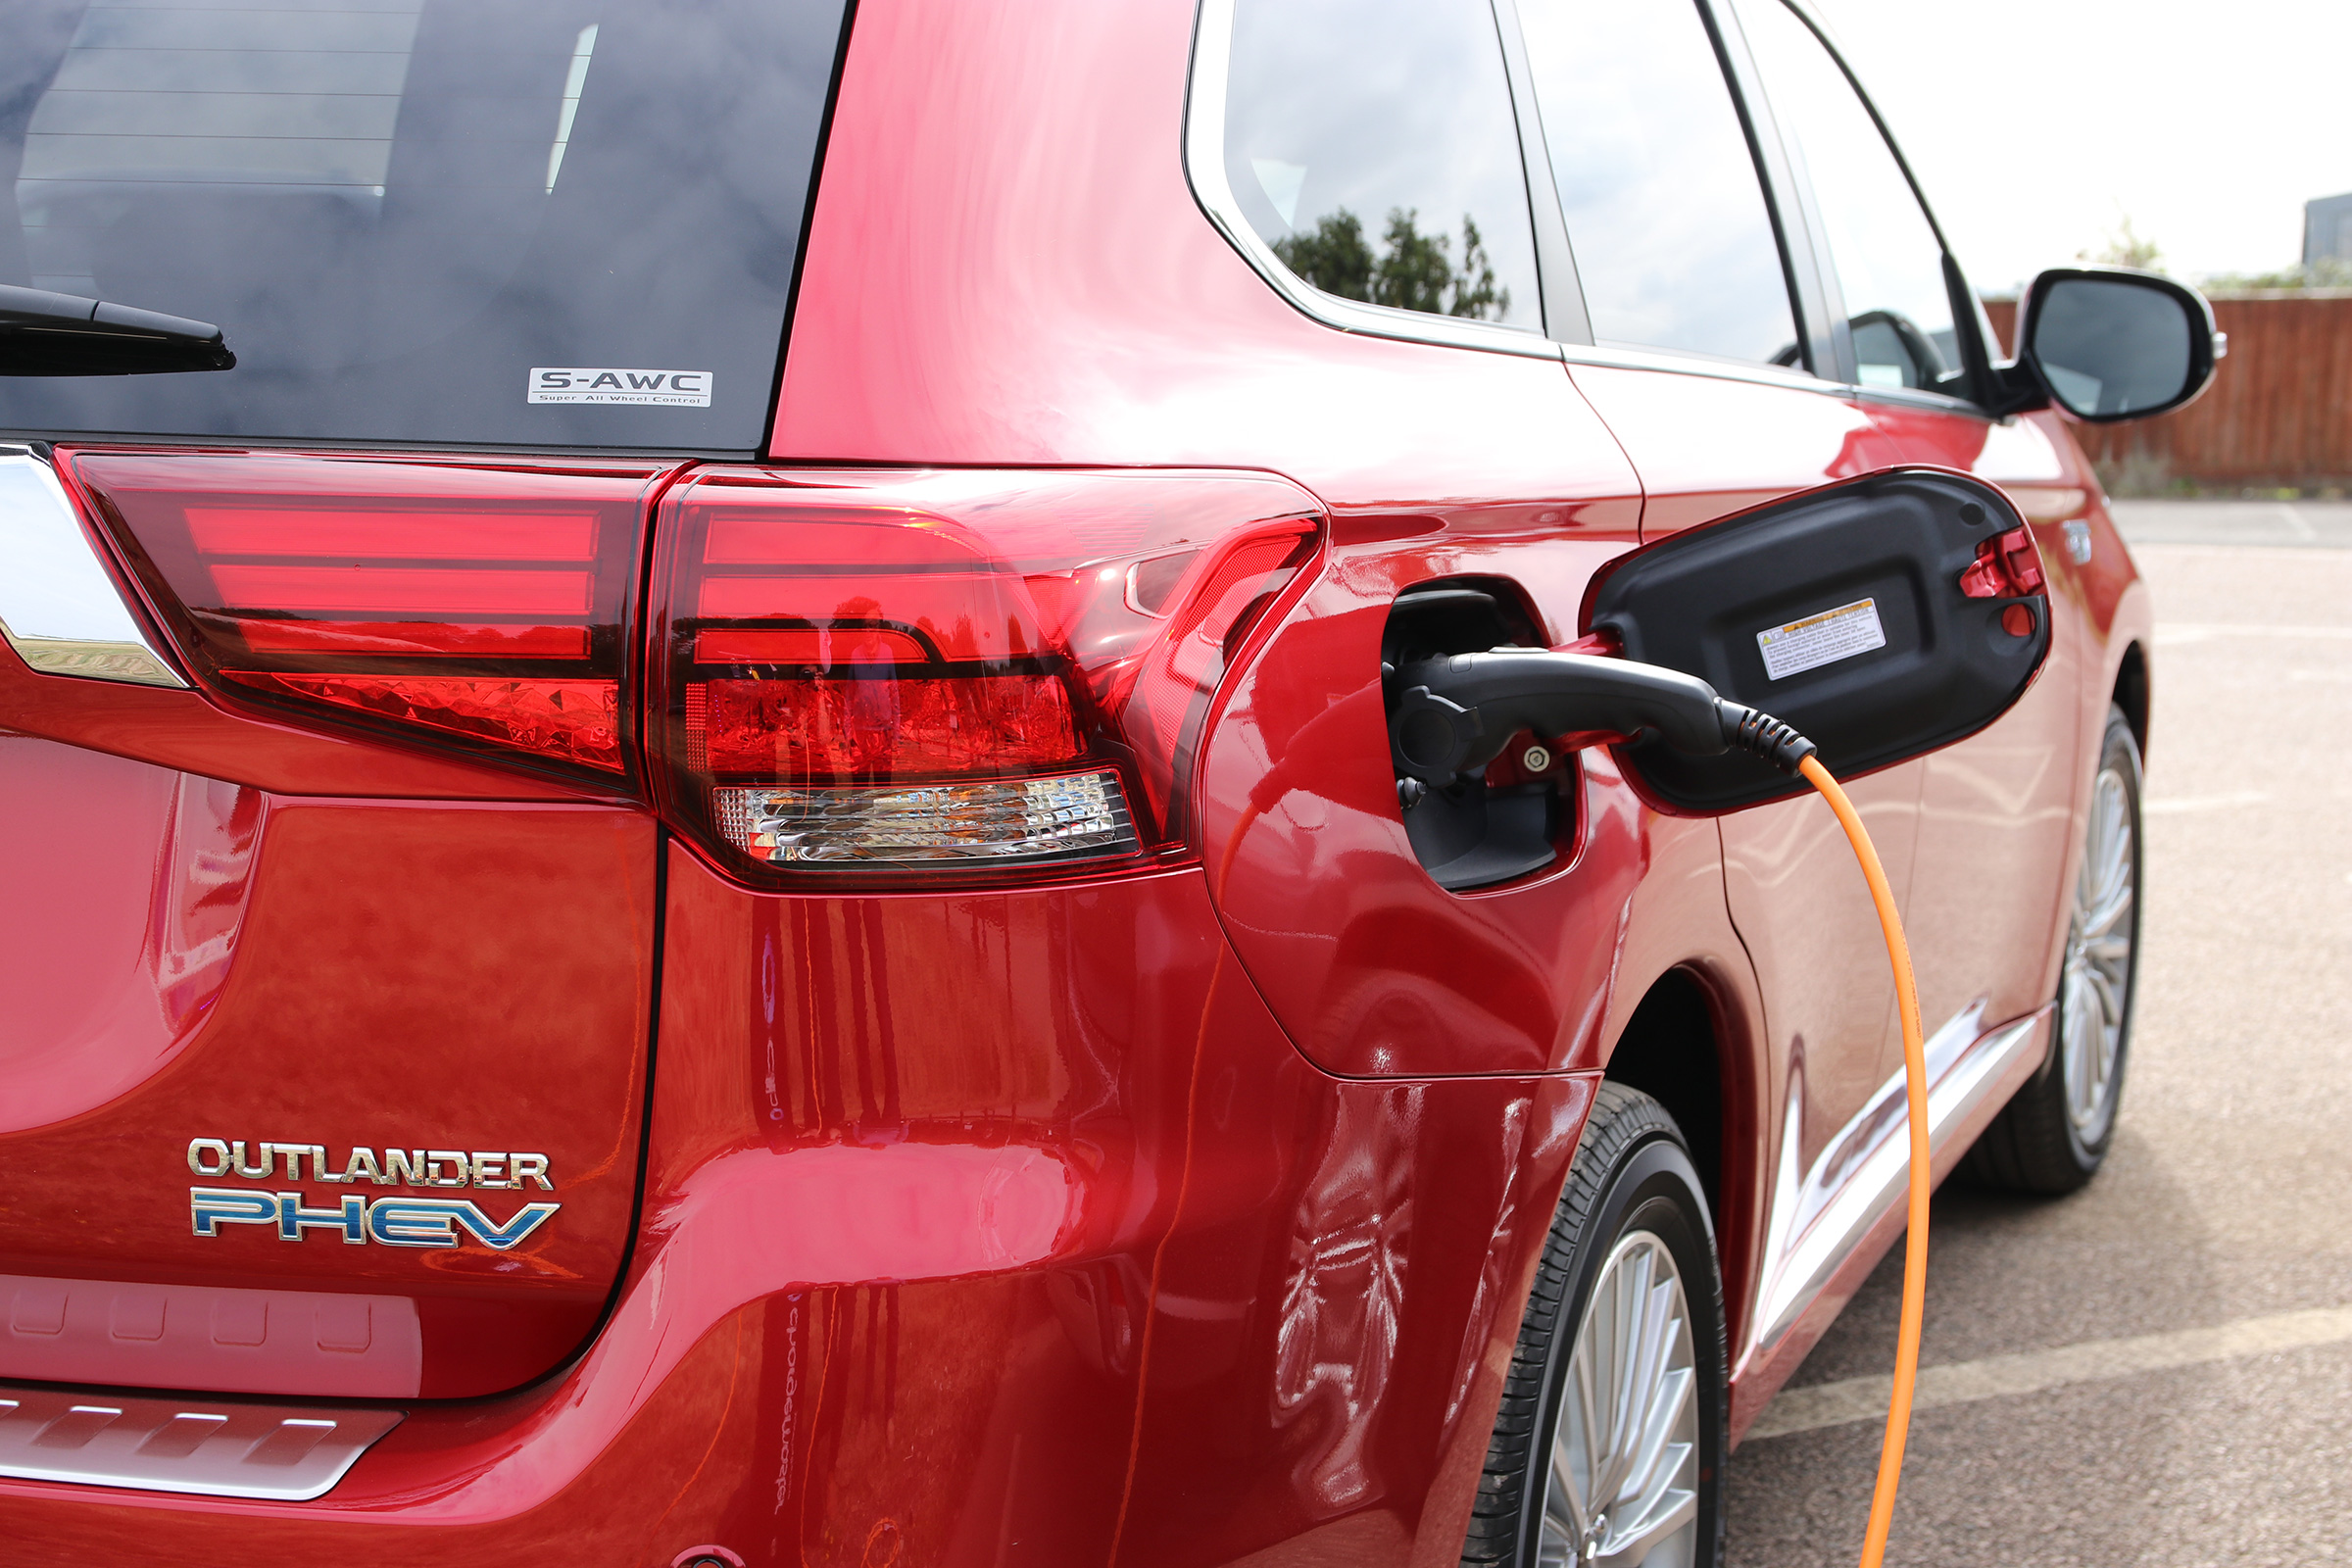 Mitsubishi Electric Car & Hybrid Vehicles